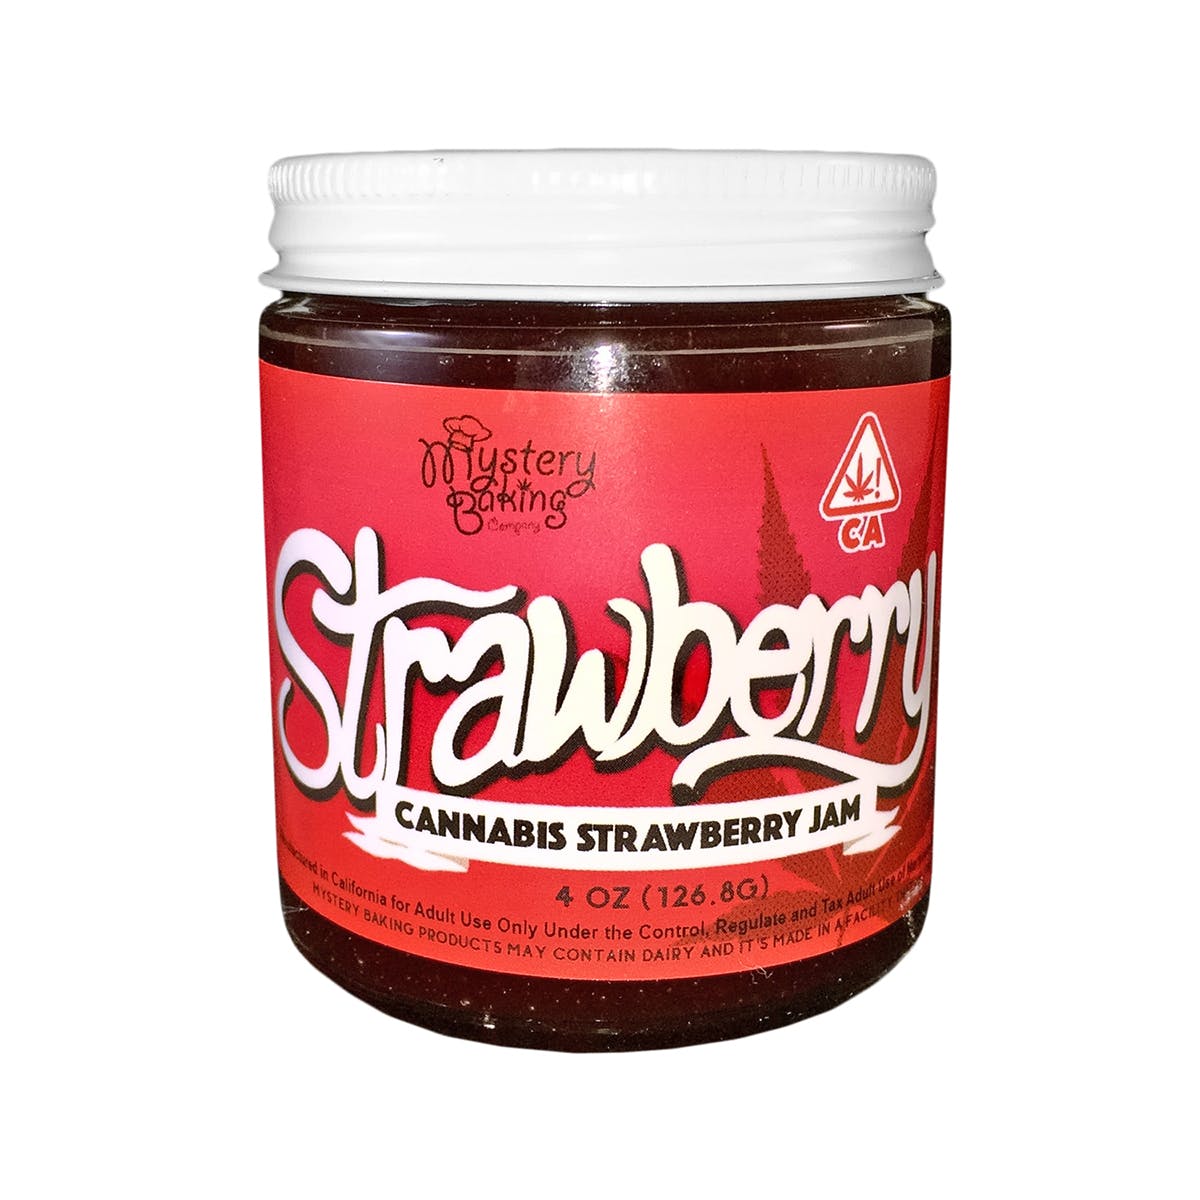 edible-mystery-baking-strawberry-jam-100mg